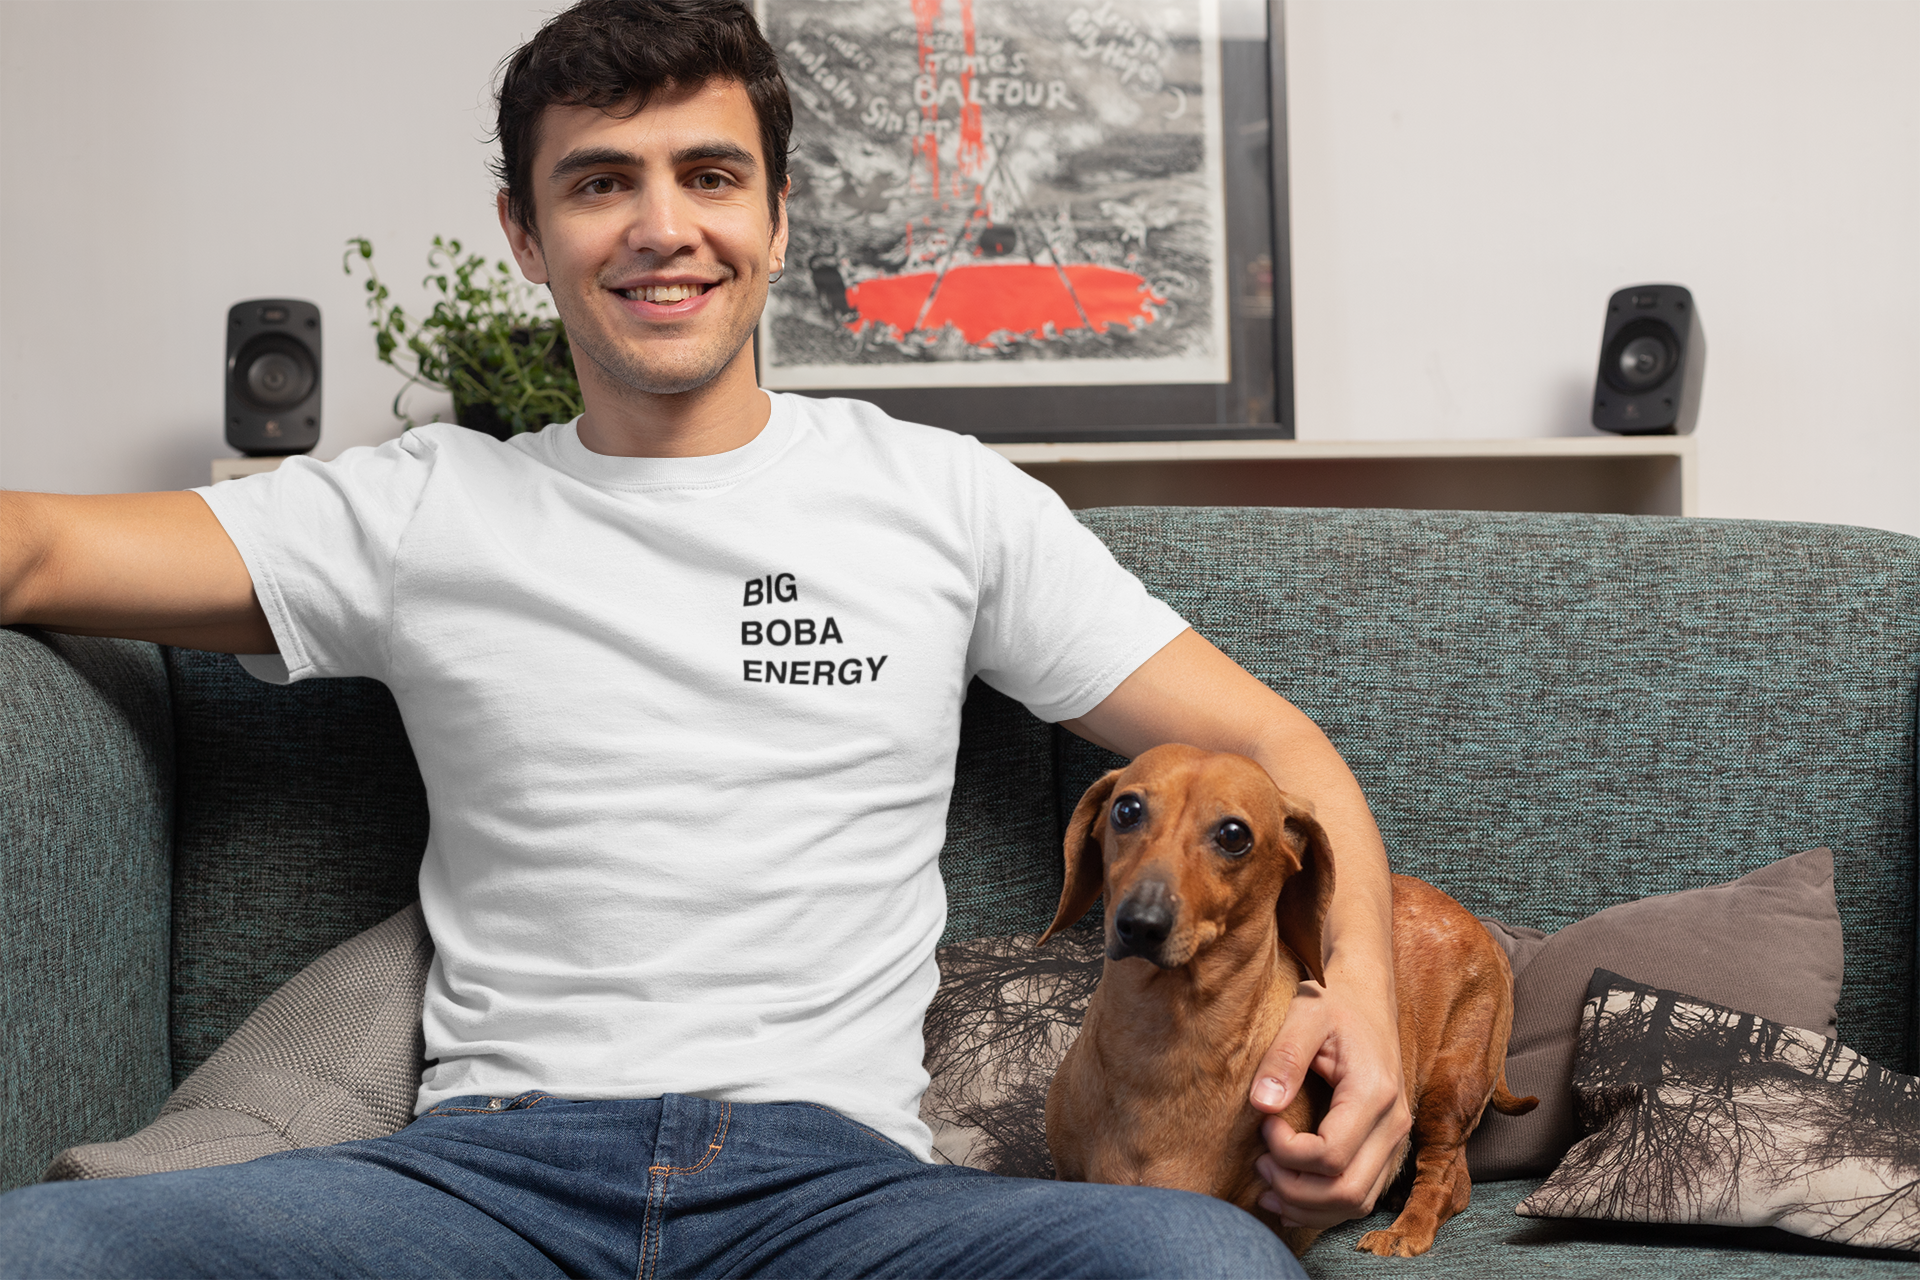 Man wearing a Big Boba Energy Shirt holding a dog